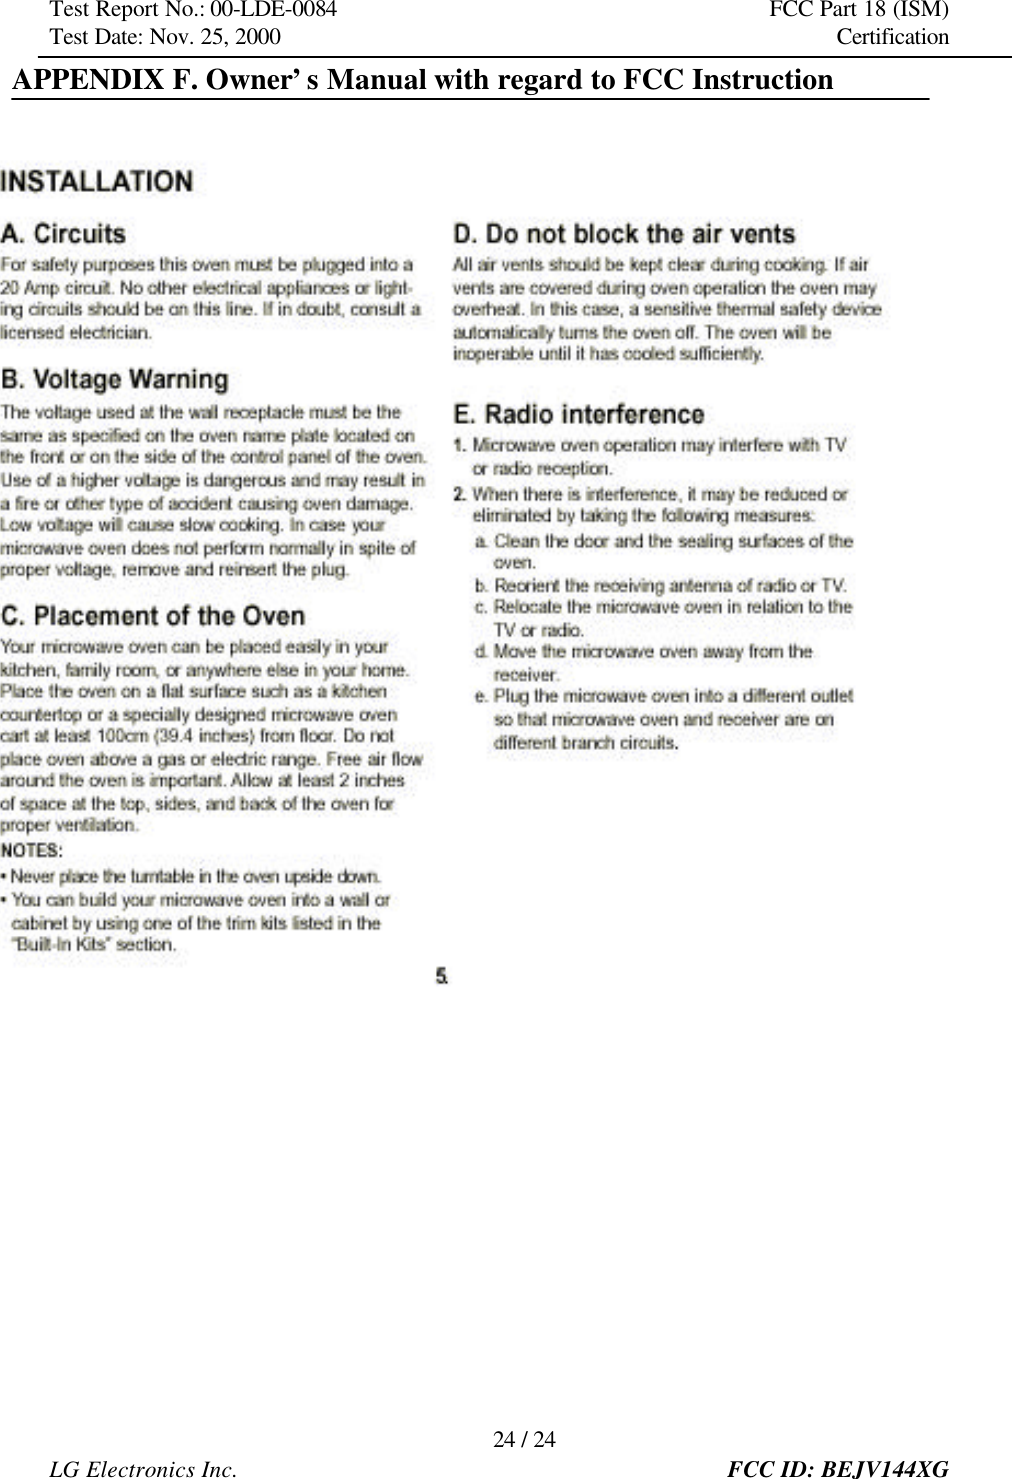 Test Report No.: 00-LDE-0084 FCC Part 18 (ISM)Test Date: Nov. 25, 2000 Certification24 / 24LG Electronics Inc. FCC ID: BEJV144XGAPPENDIX F. Owner’s Manual with regard to FCC Instruction